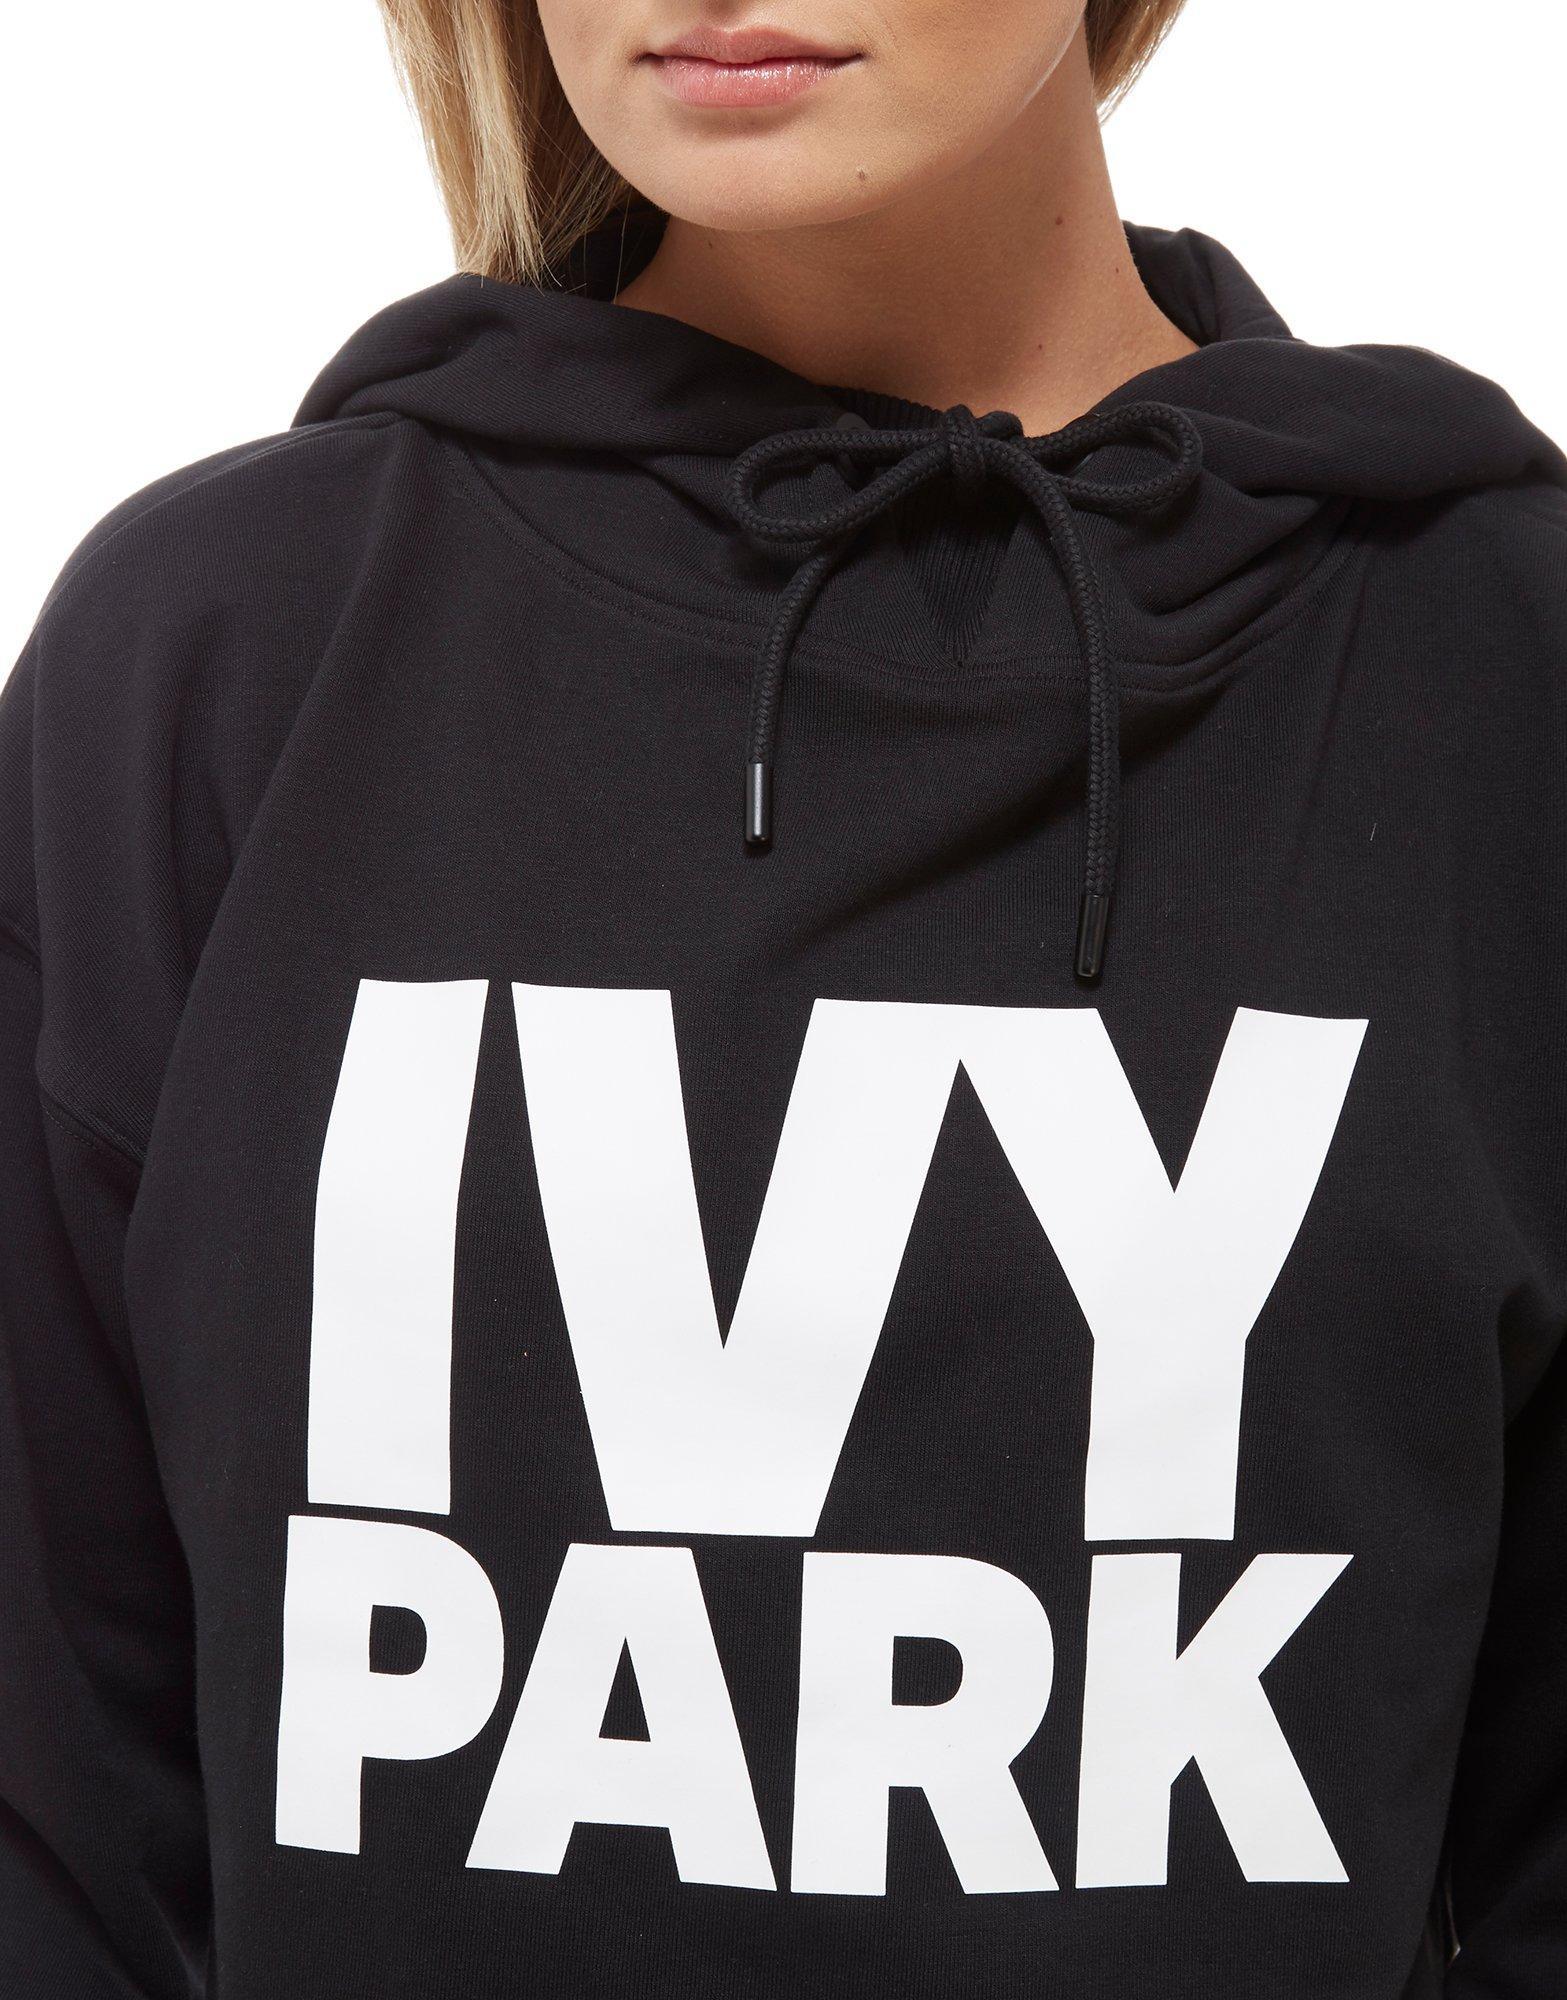 ivy park black and white cropped hoodie,parvaportotel.com